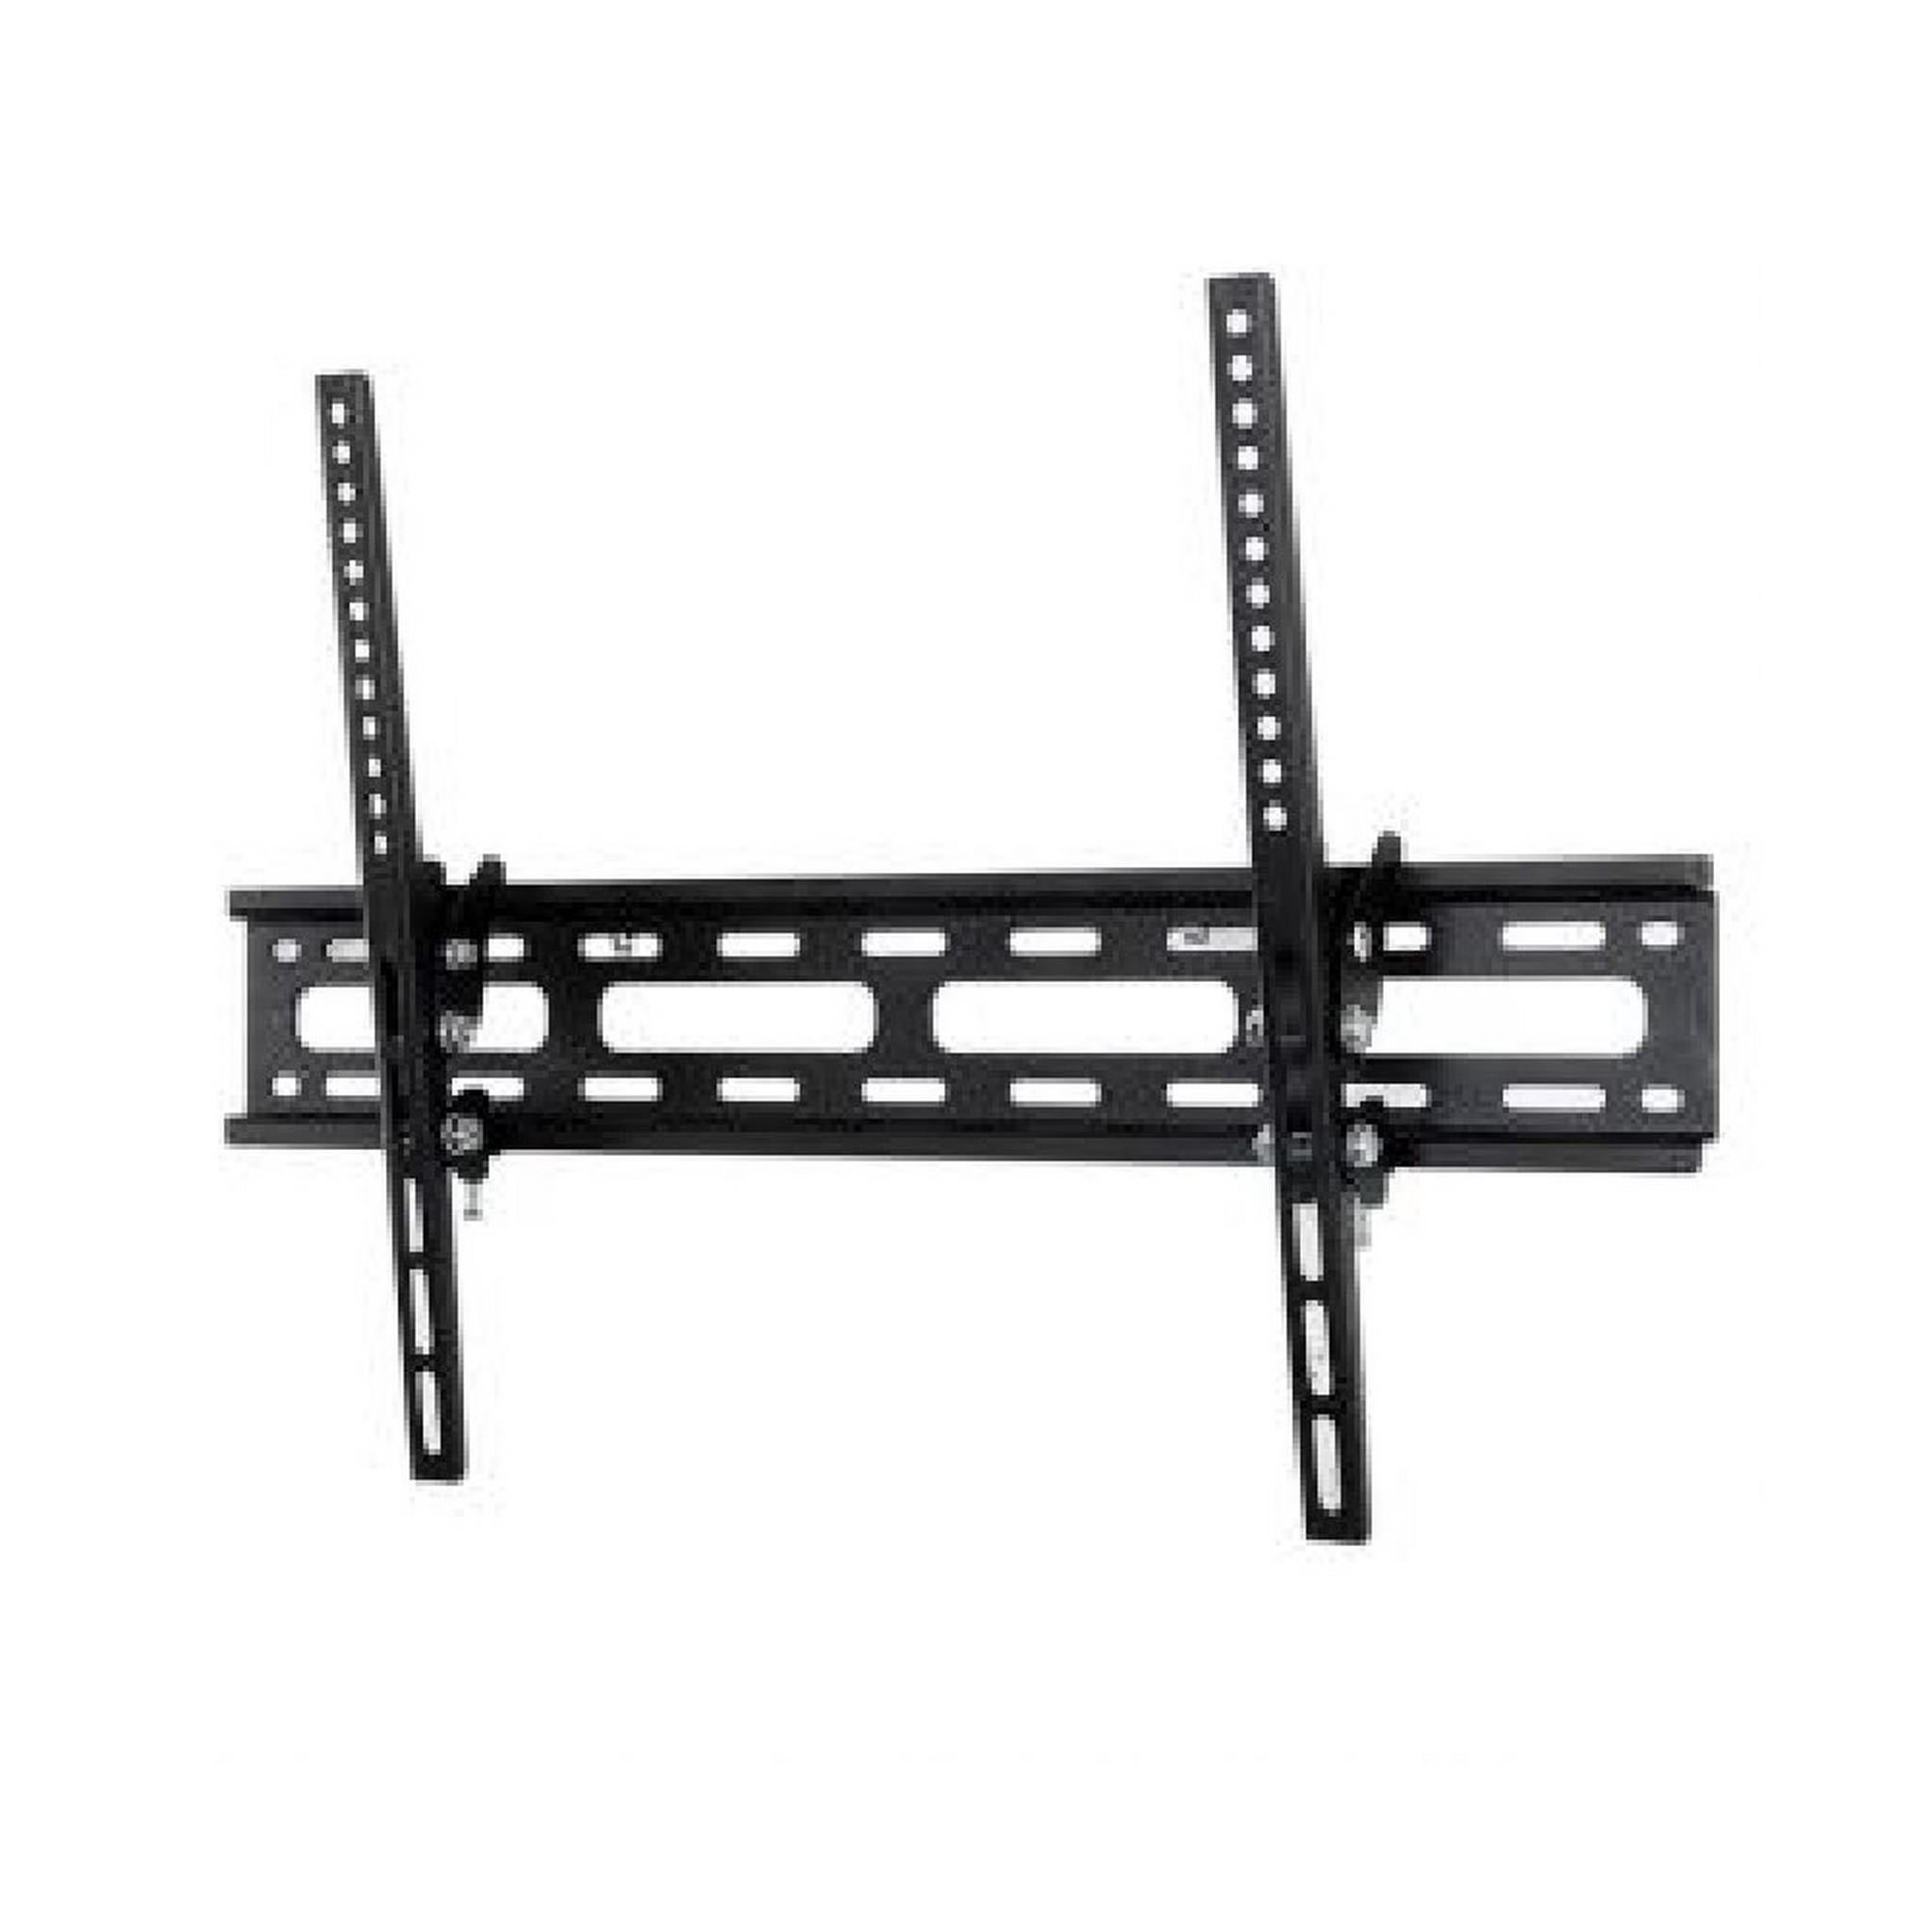 Loctek Fixed Wall Bracket, 36 to 55-inch TVs, 35Kg Loading Capacity, PSW598MF – Black